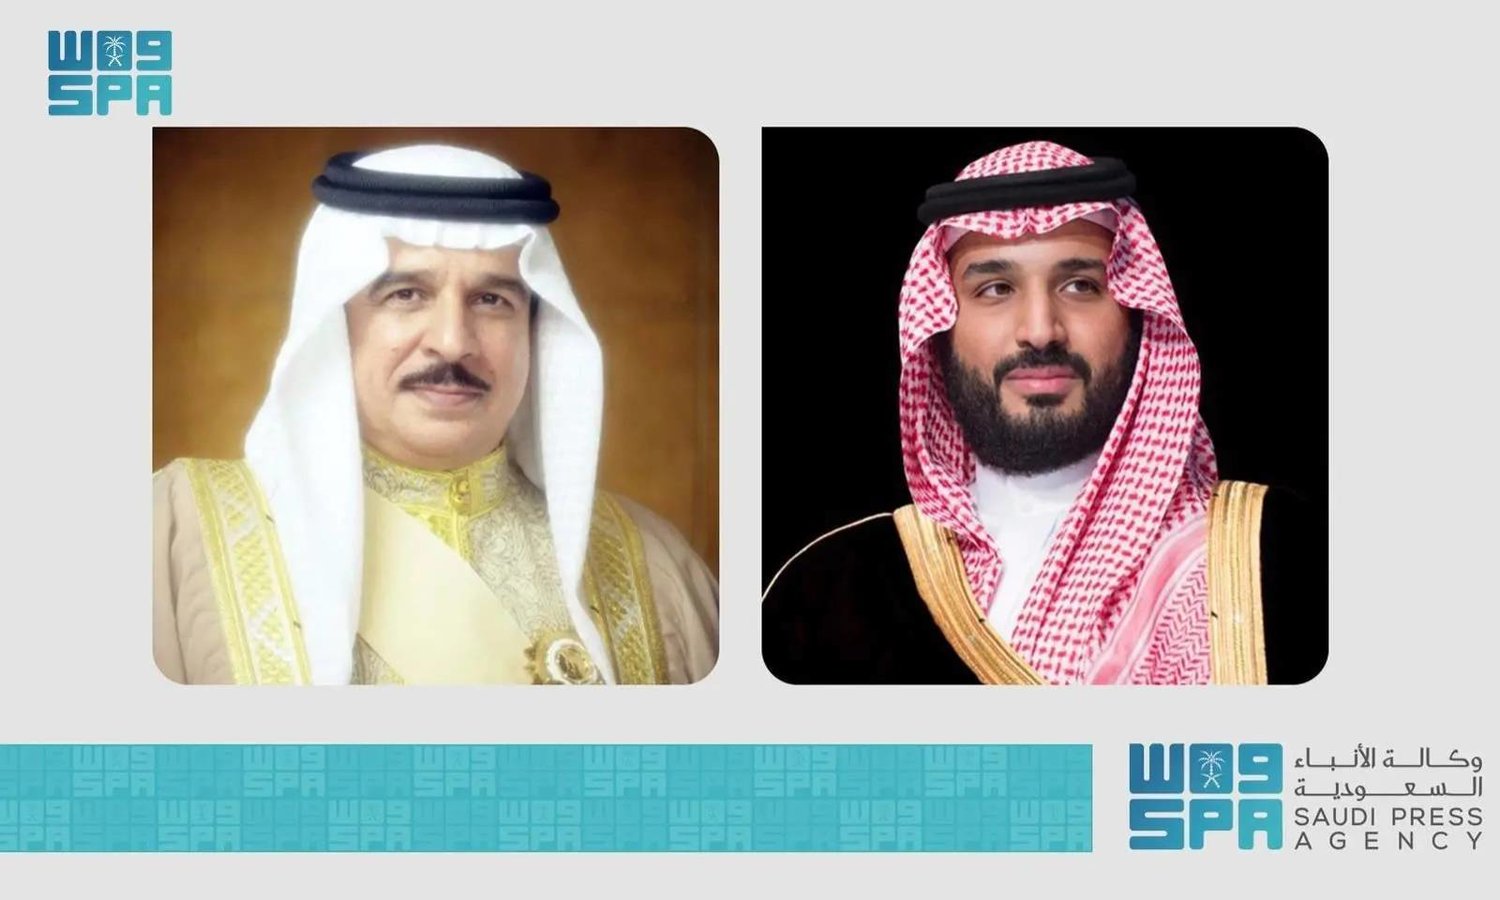 Saudi Crown Prince and Prime Minister Mohammed bin Salman bin Abdulaziz Al Saud offered his condolences to King Hamad bin Issa Al Khalifa of the Kingdom of Bahrain over the martyrdom of military personnel.